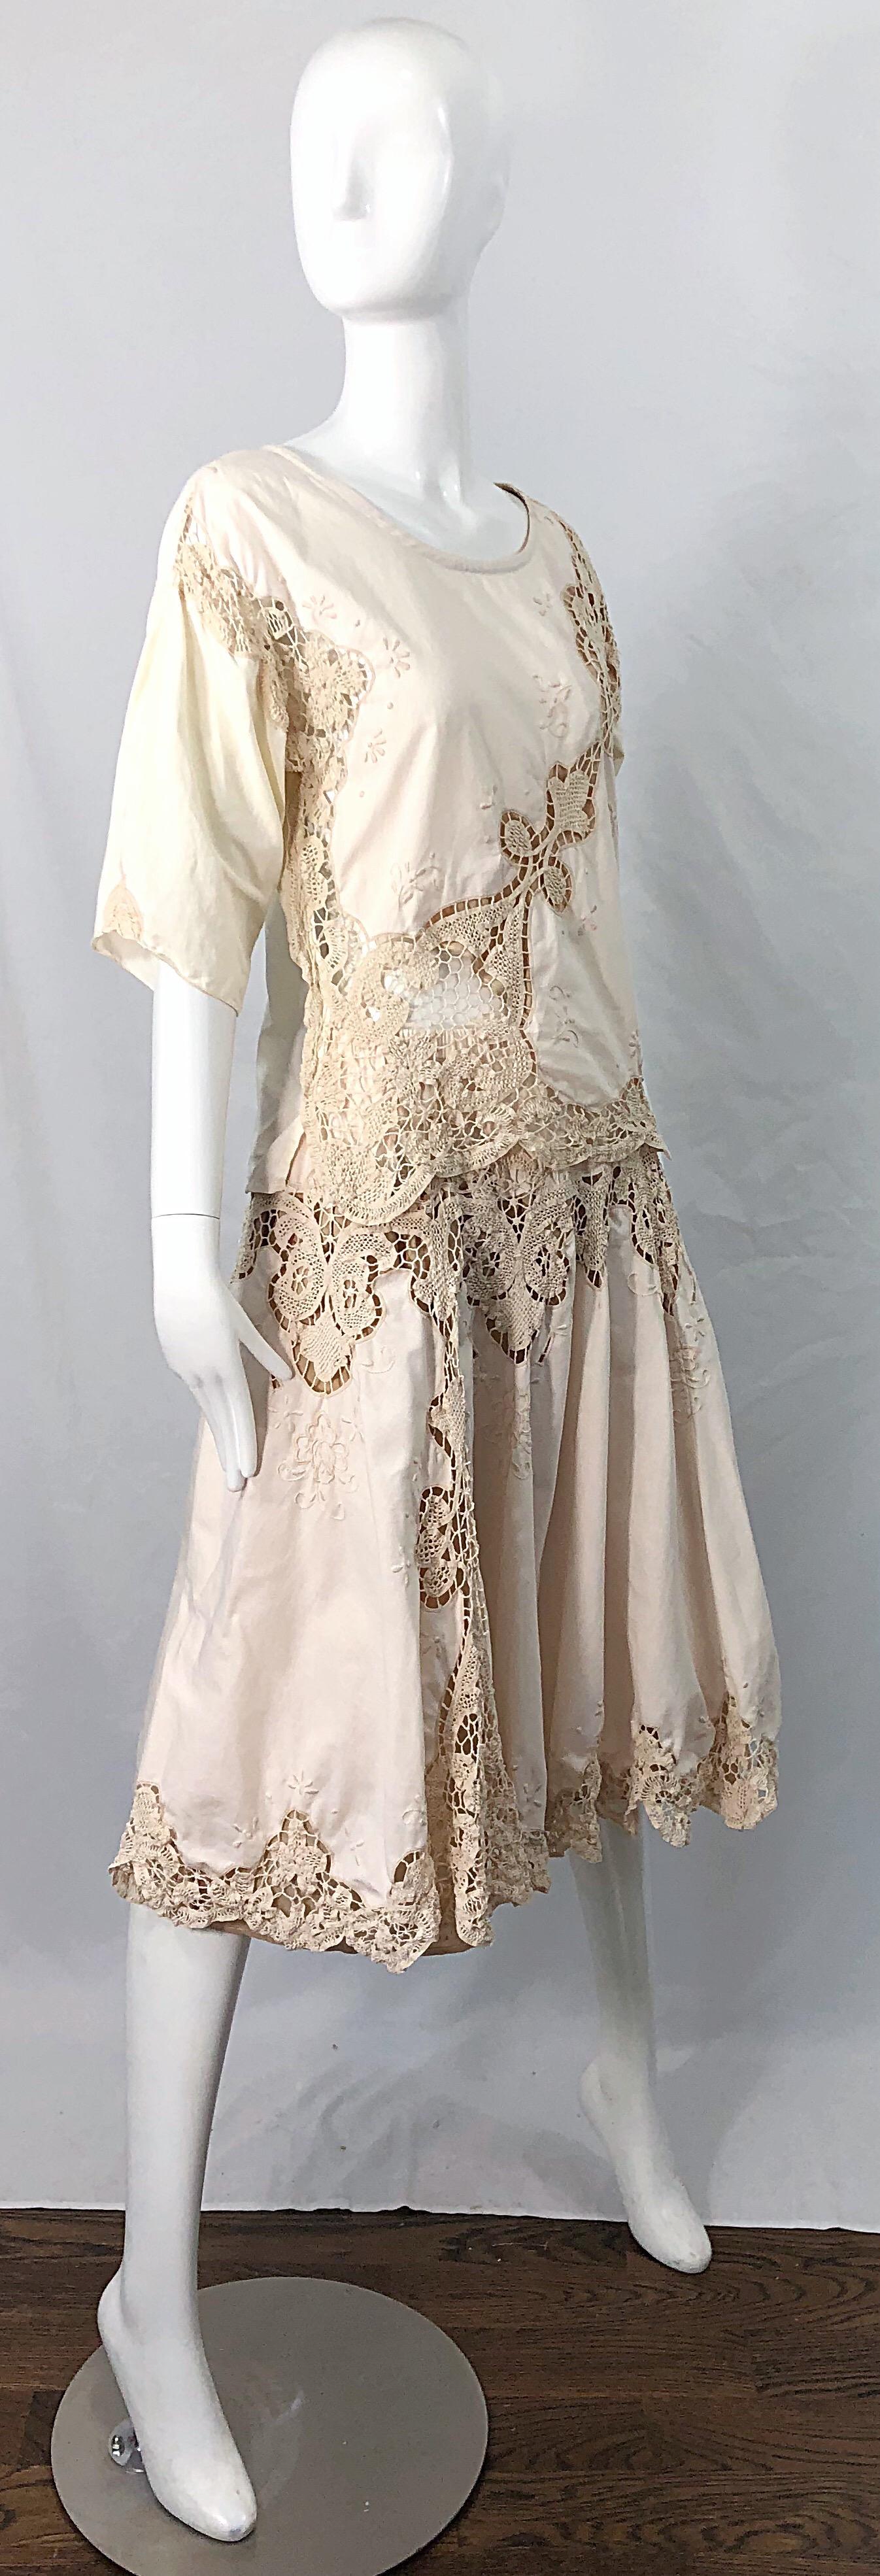 1980s Ivory Cotton Crochet Boho Shirt / Skirt Vintage 80s Dress Ensemble Set 9